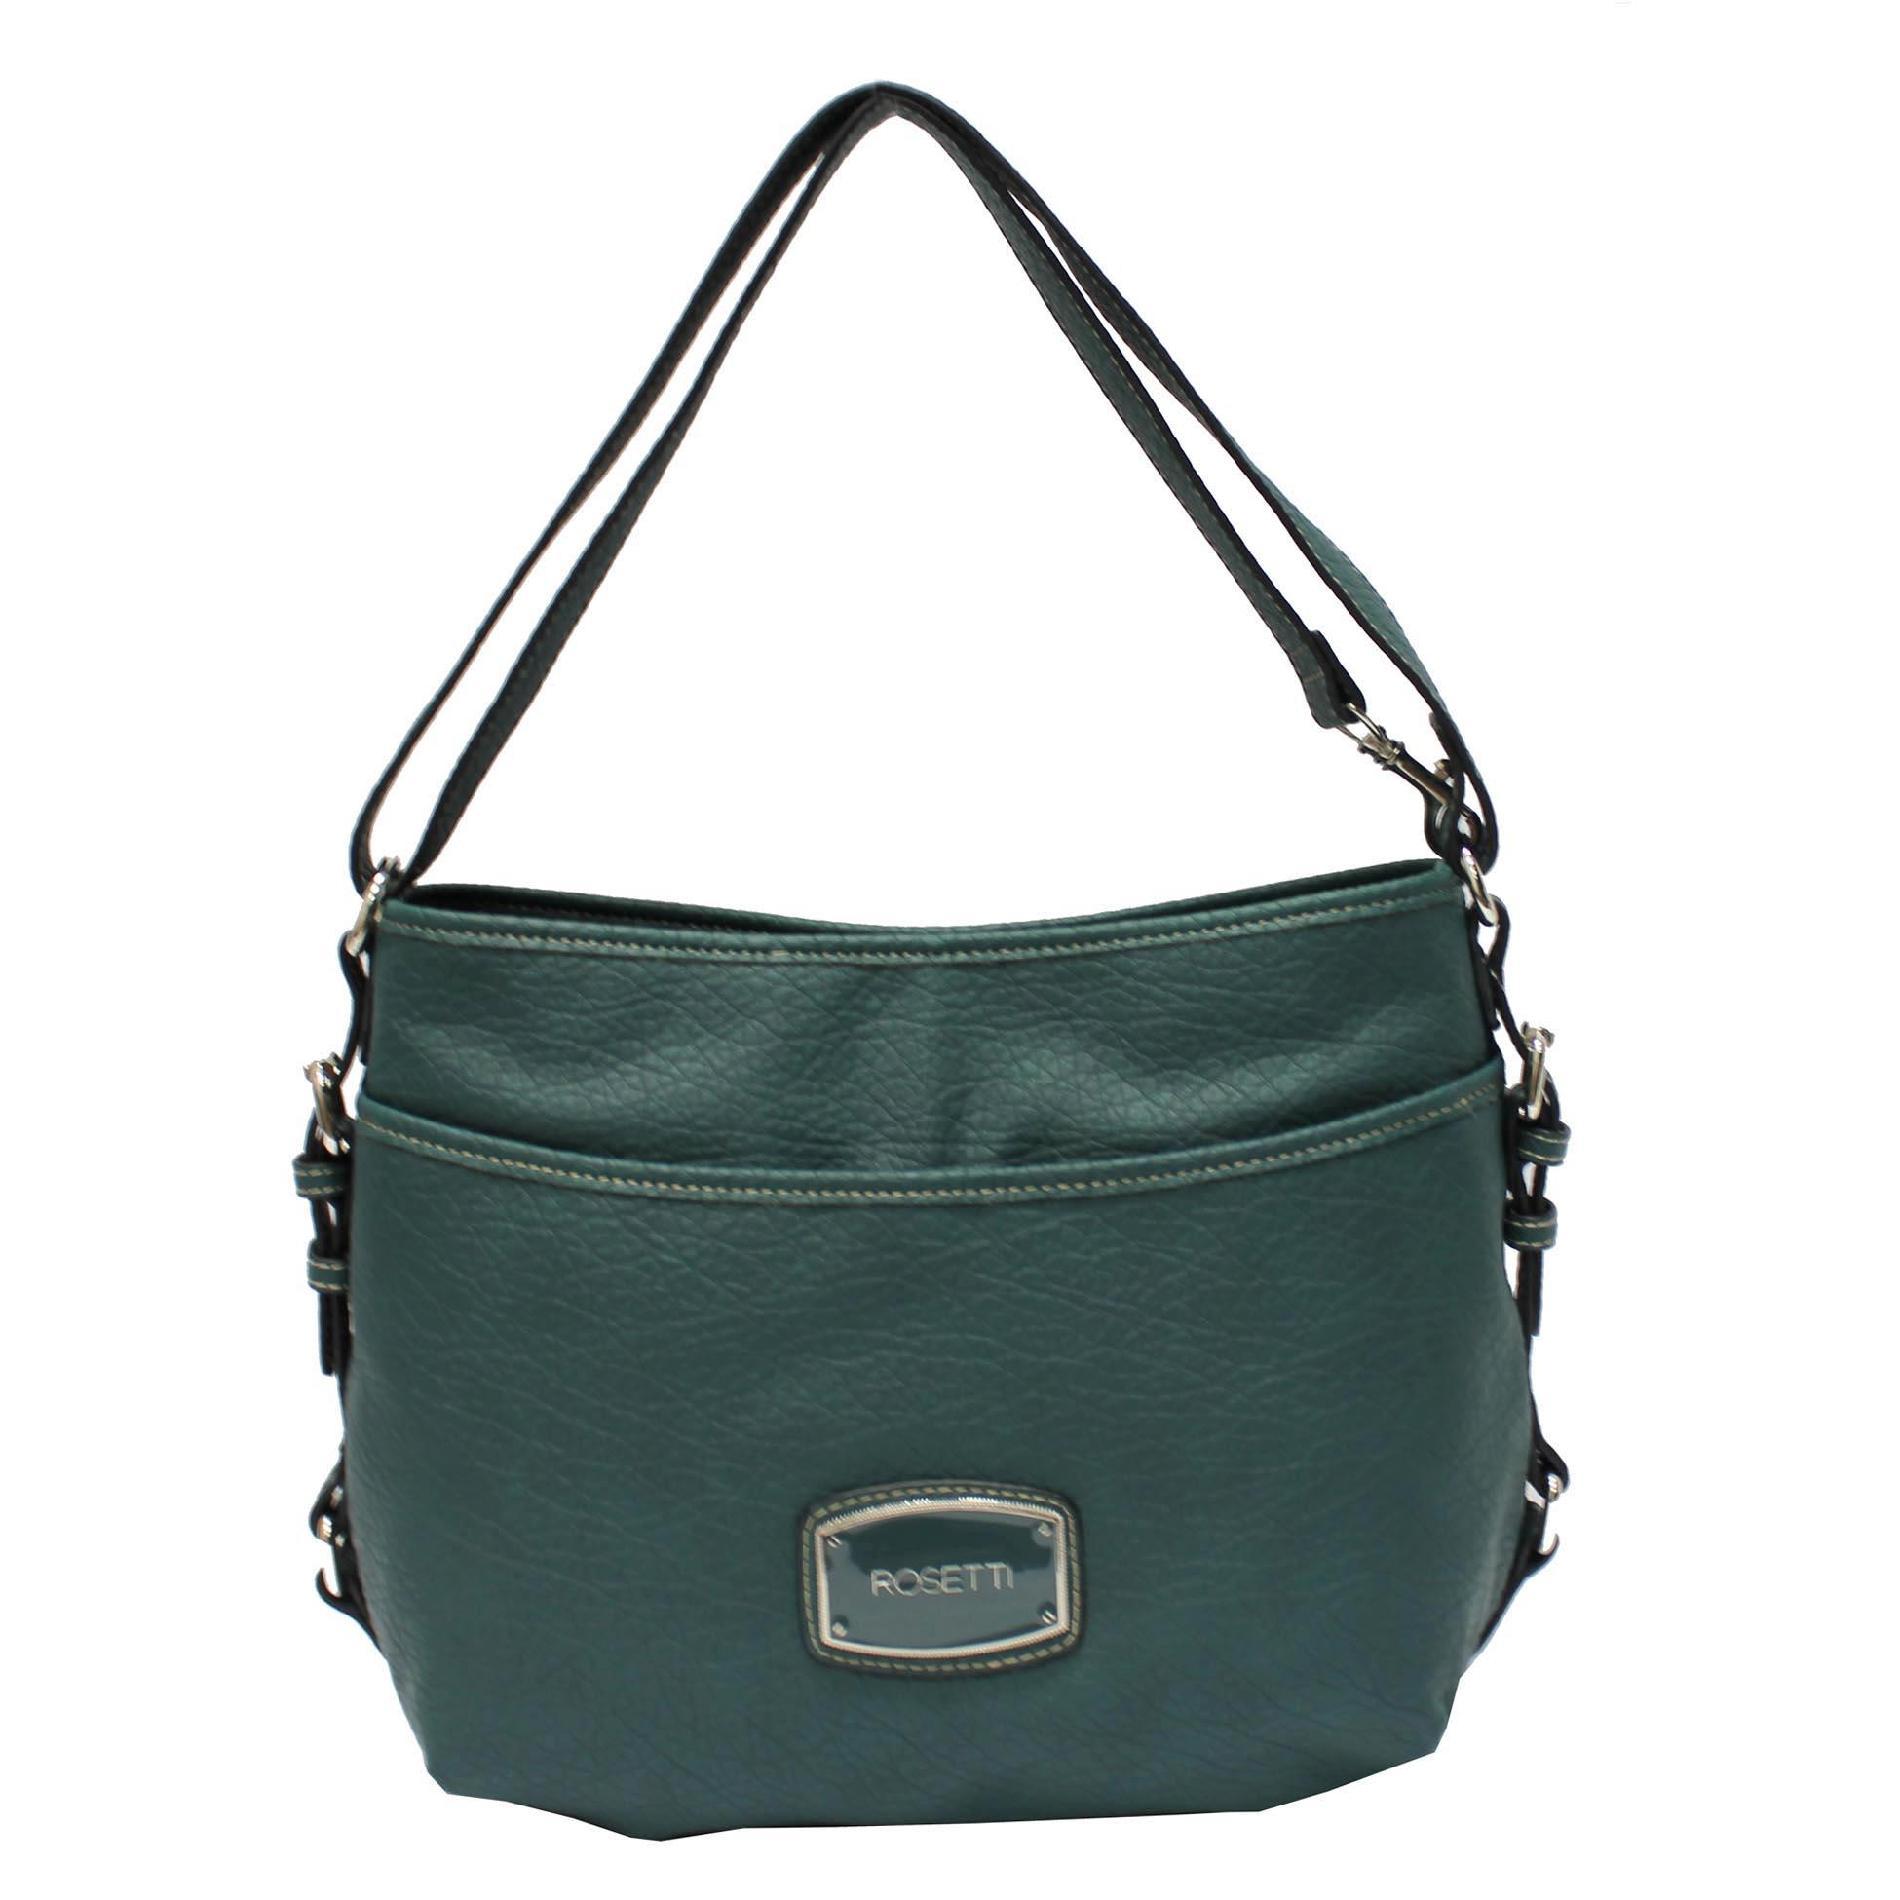 Rosetti Women's Pure & Simple Handbag - Faux Leather